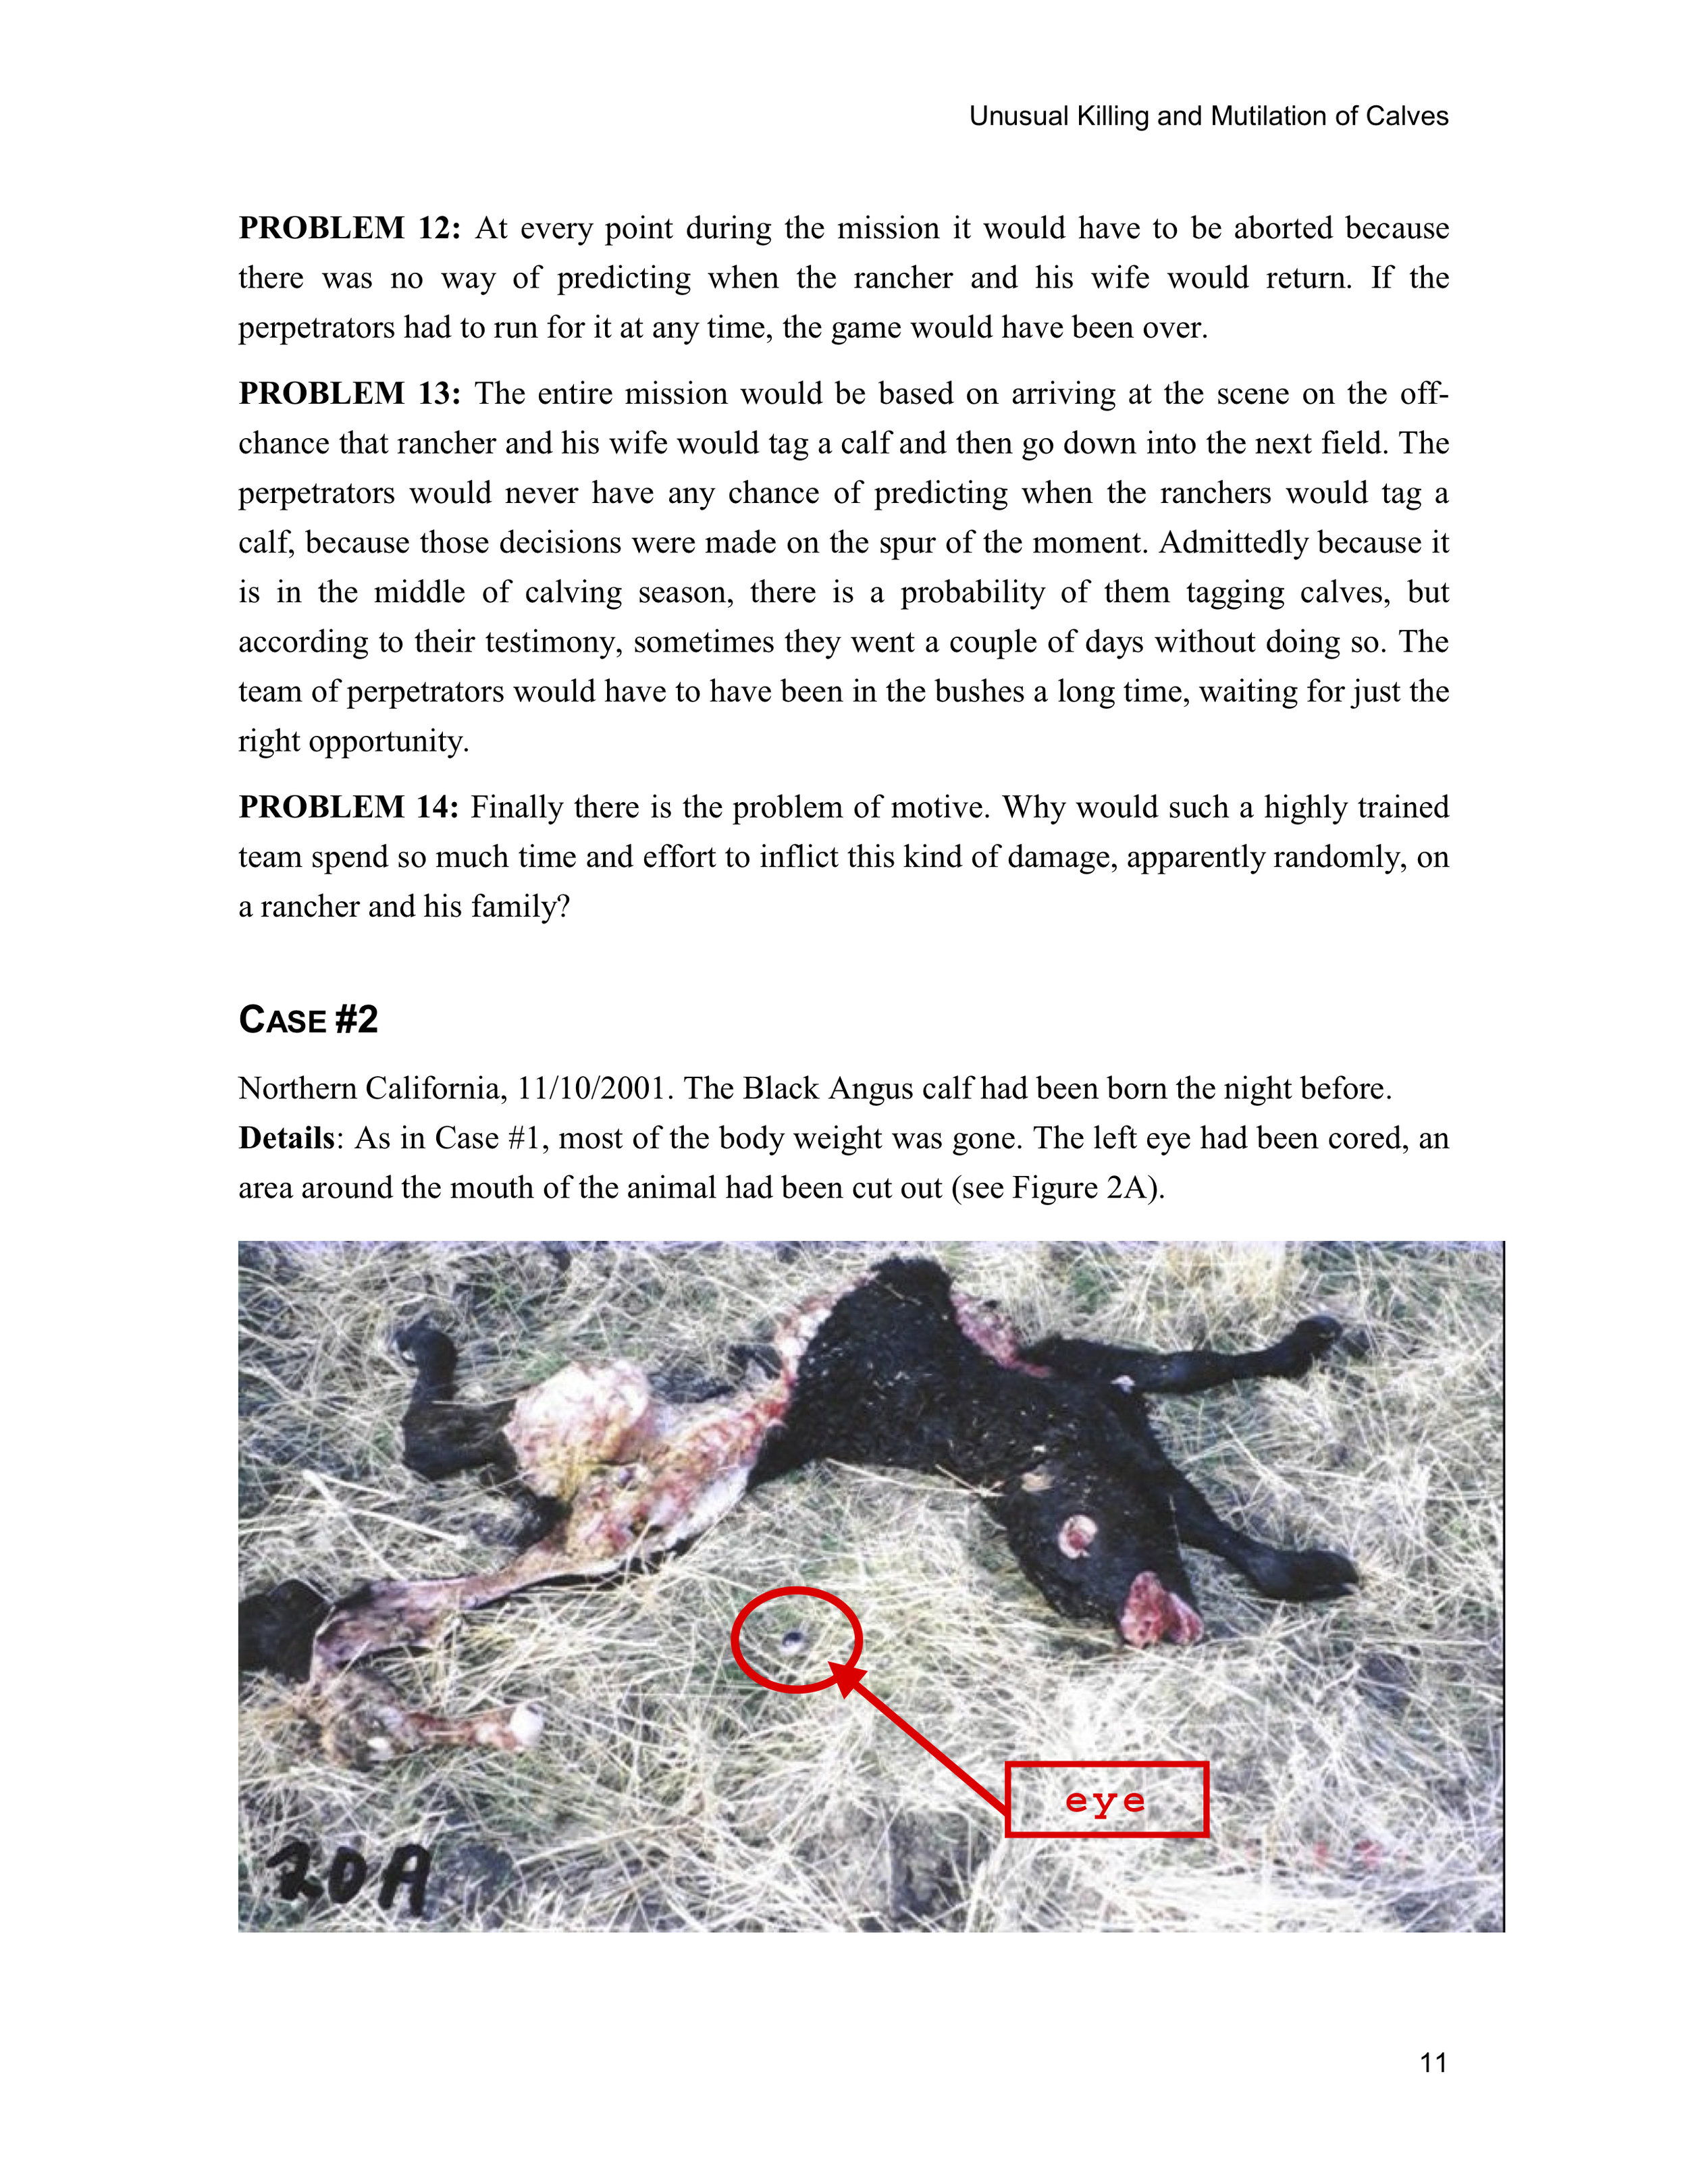 1997 ANIMAL MUTILATION REPORT 10.jpg